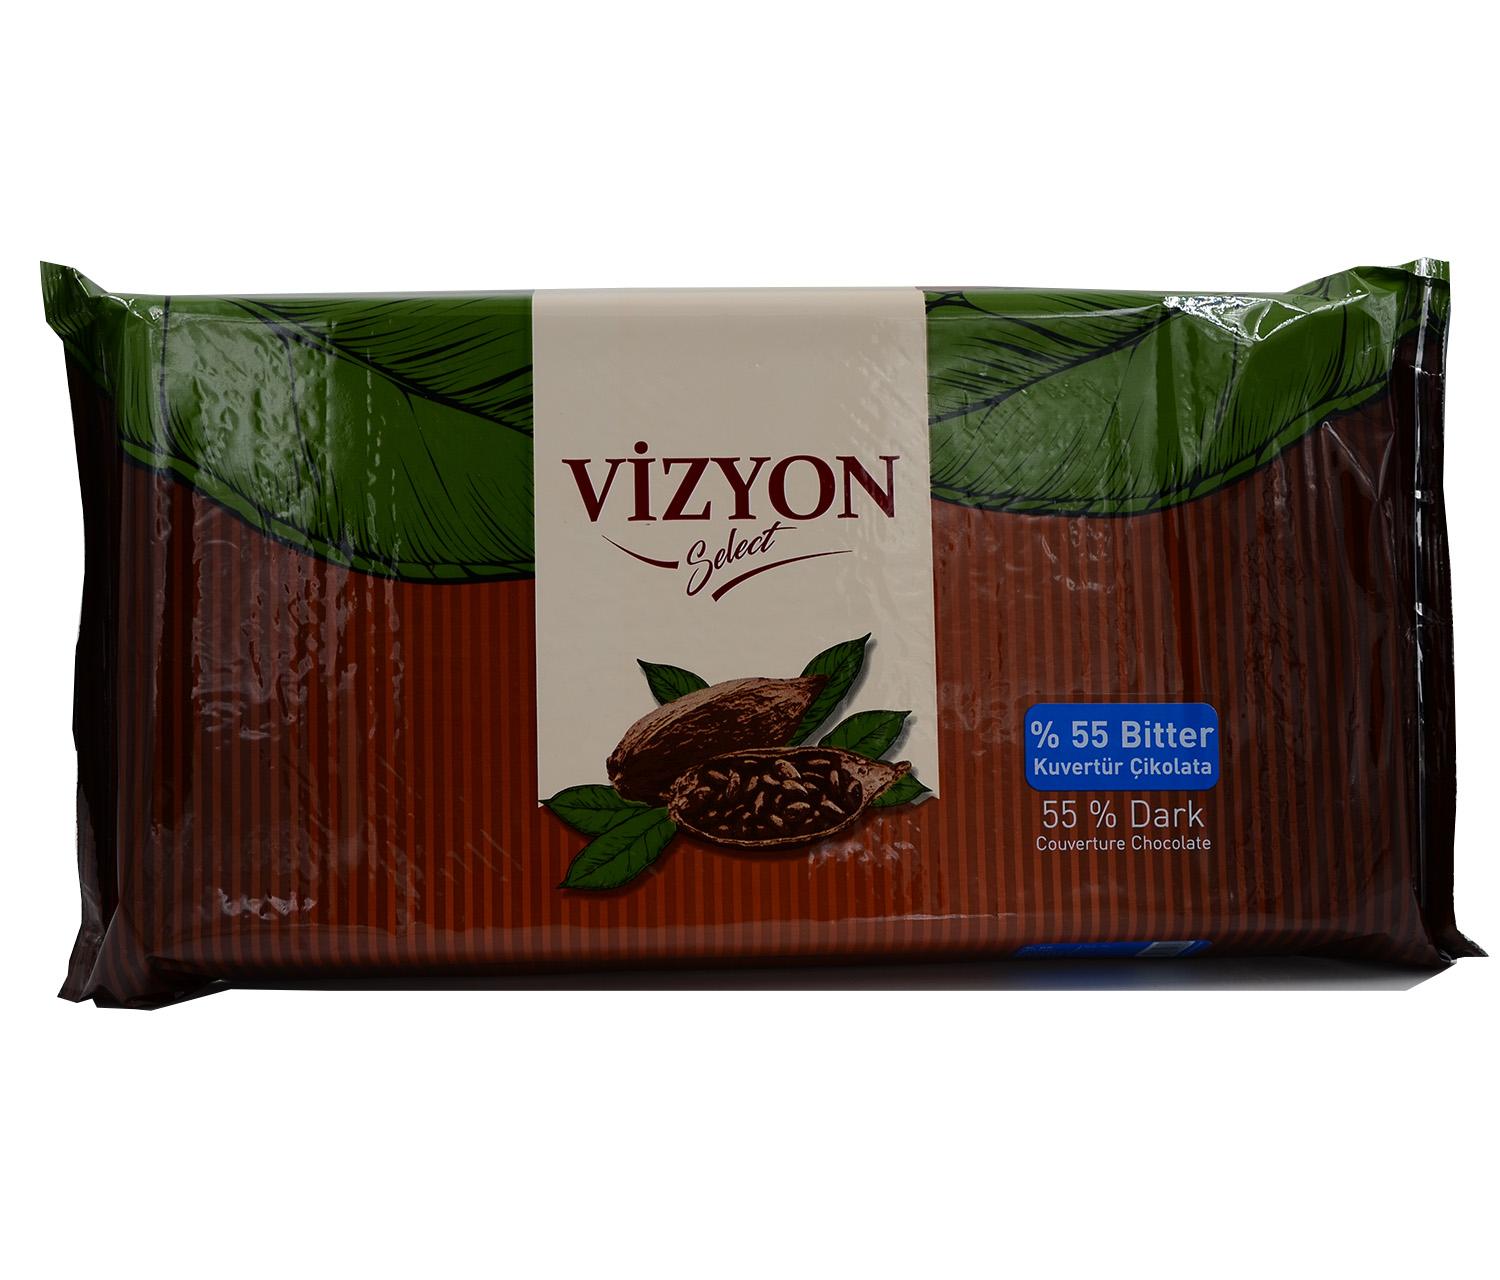 Vizyon Bitter Kuvertür Çikolata (2.5 kg)